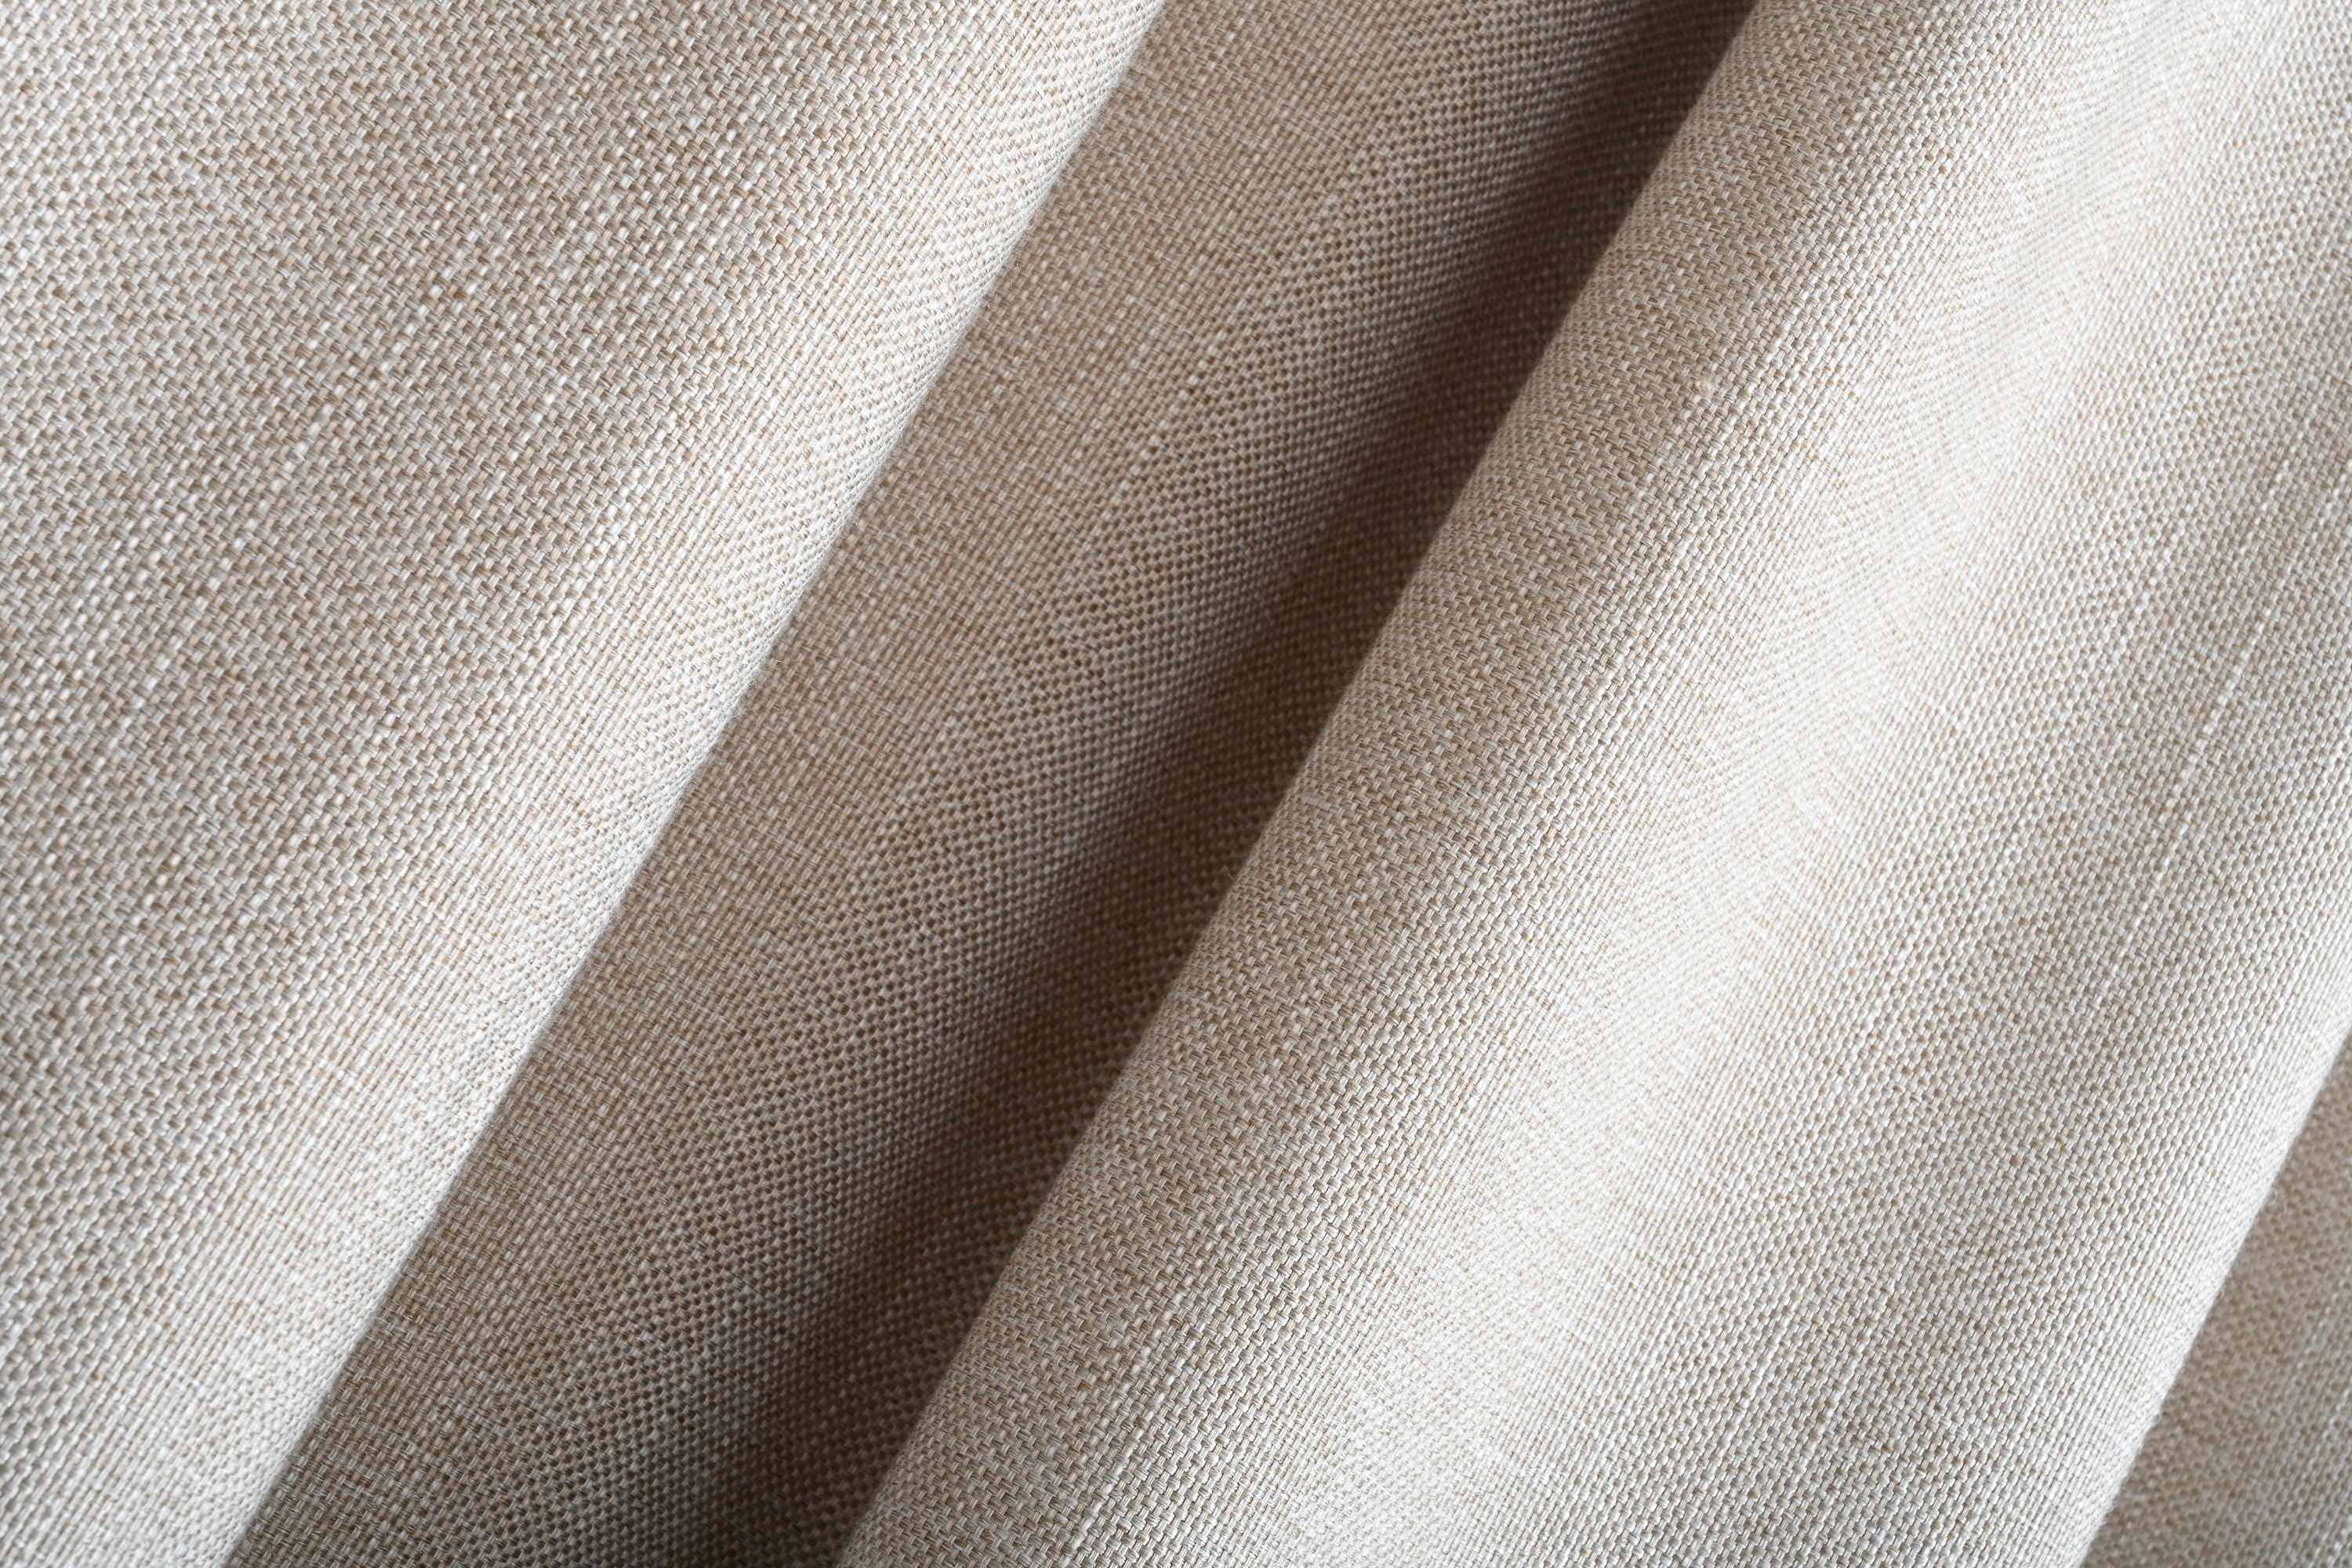 close up of cream colored fabric 